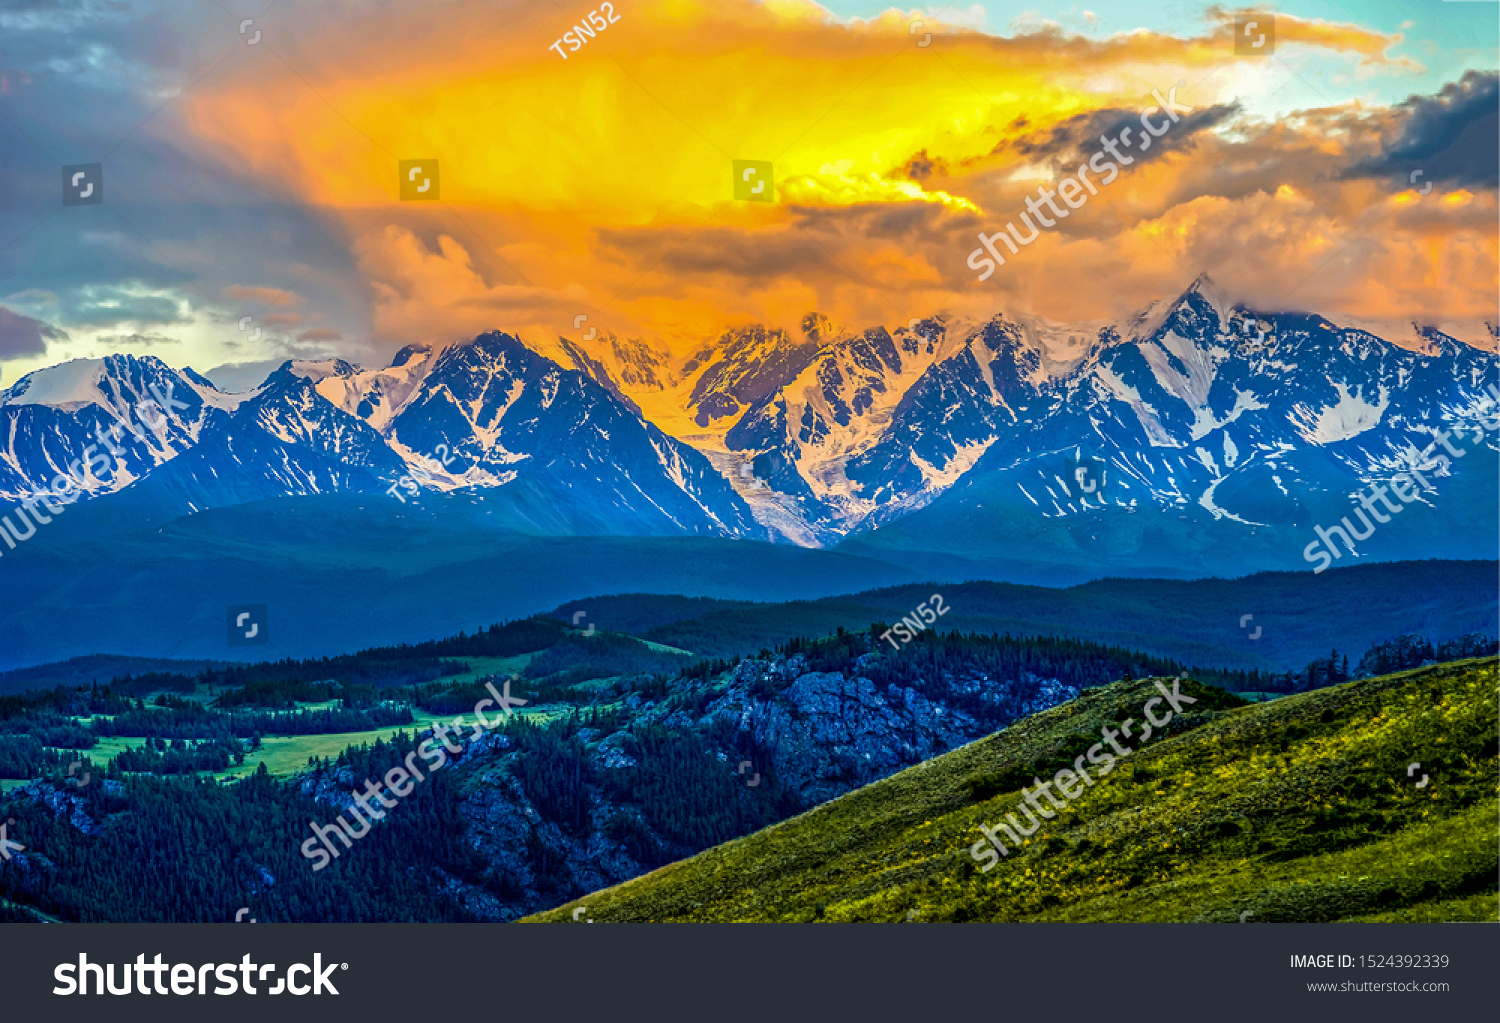 Mountains peak on sunset background #1524392339